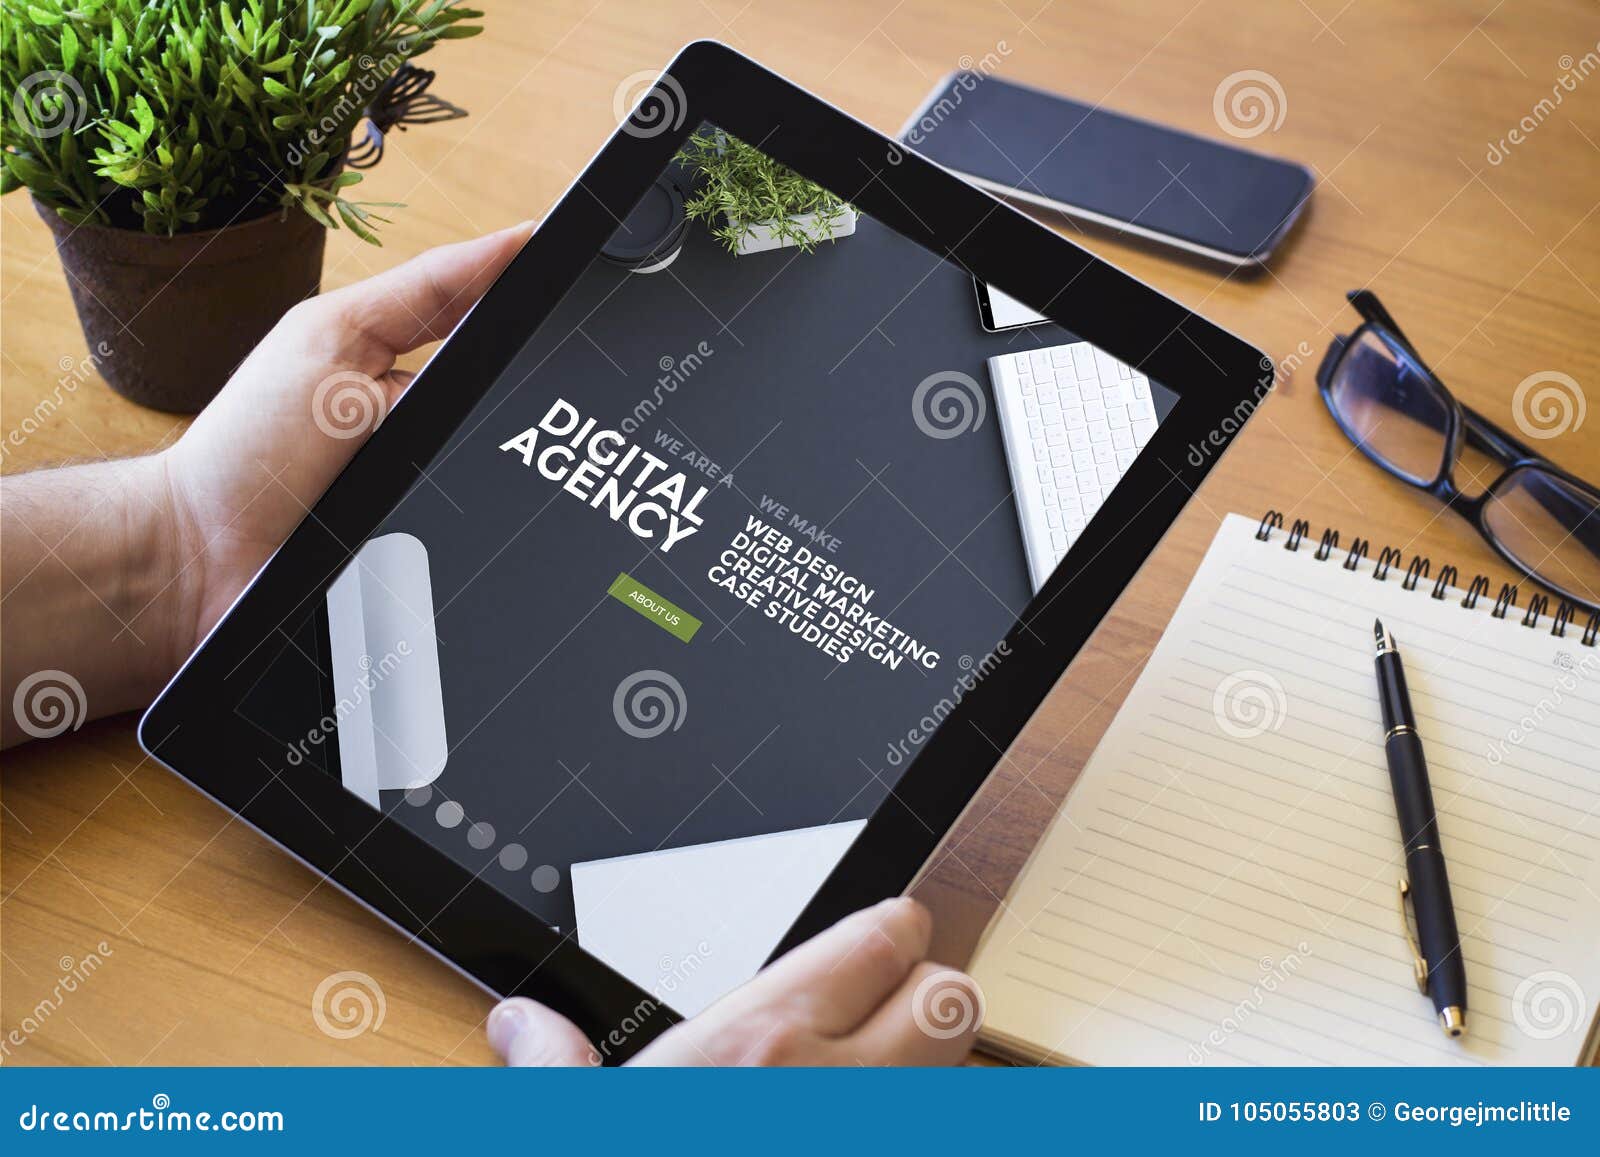 desktop tablet digital agency